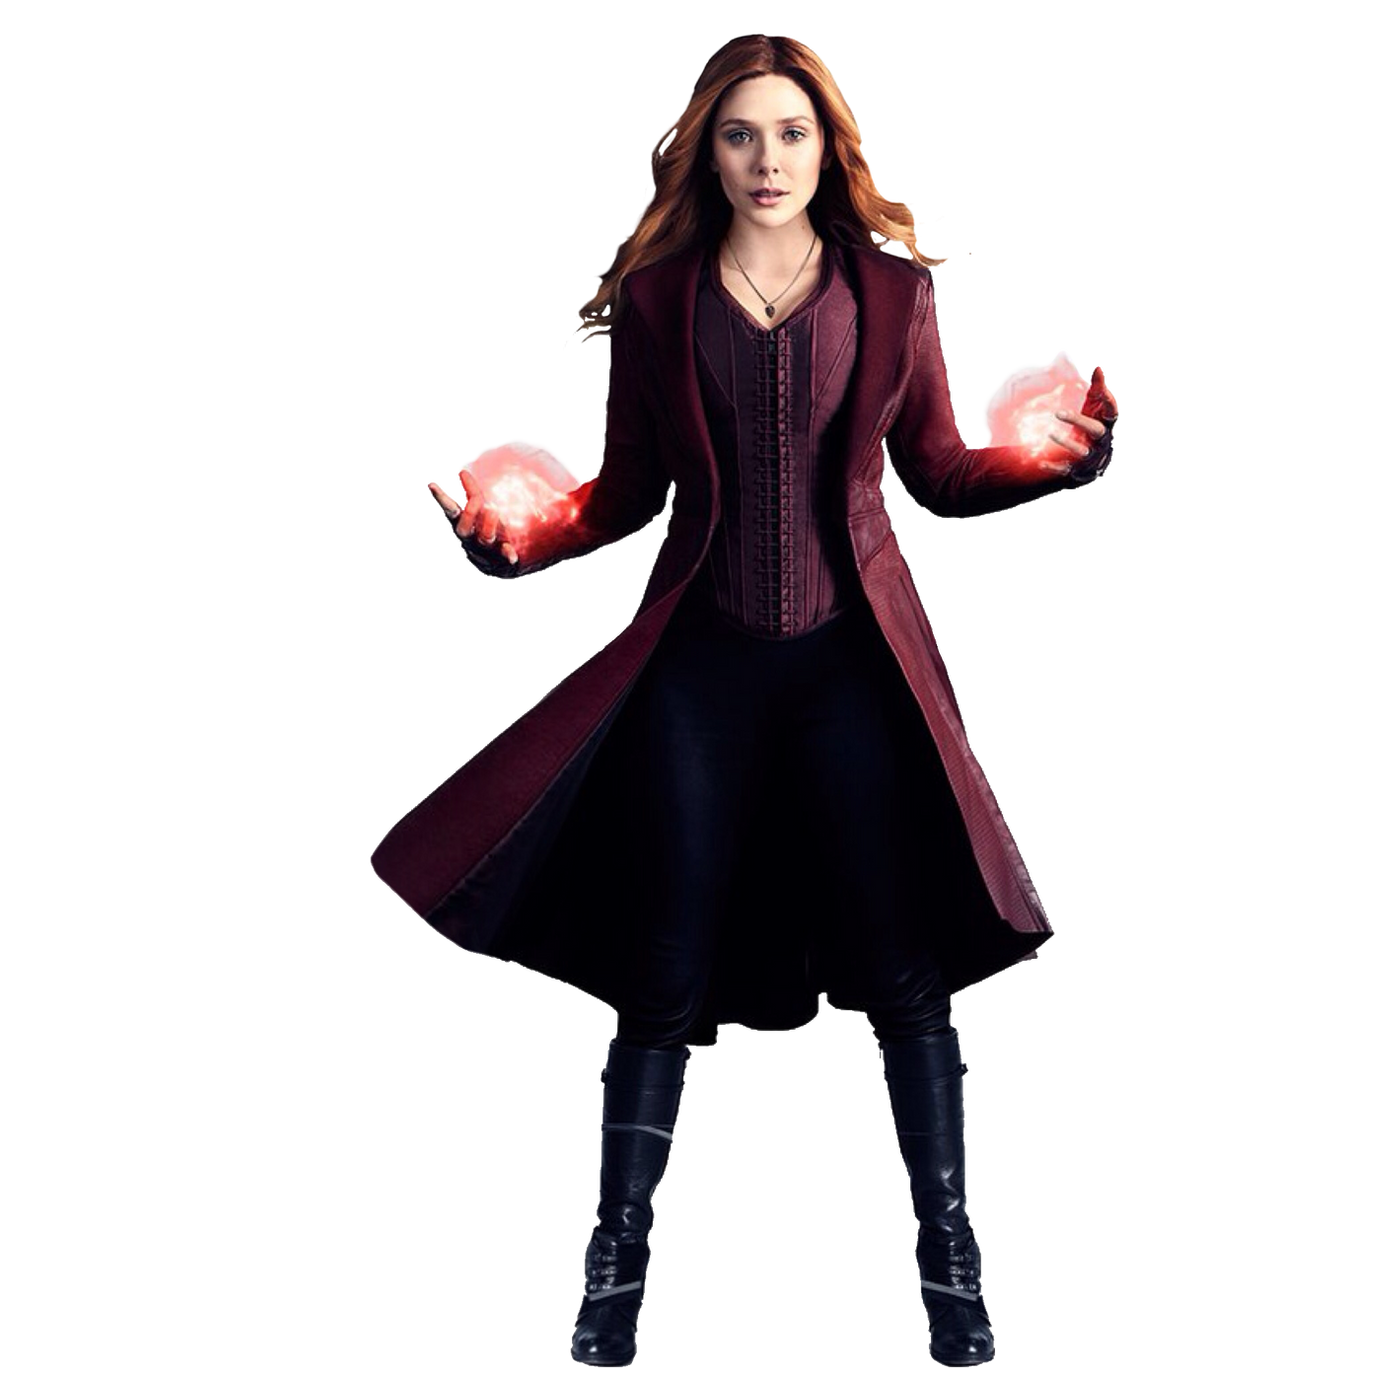 Scarlet Witch Transparent Image